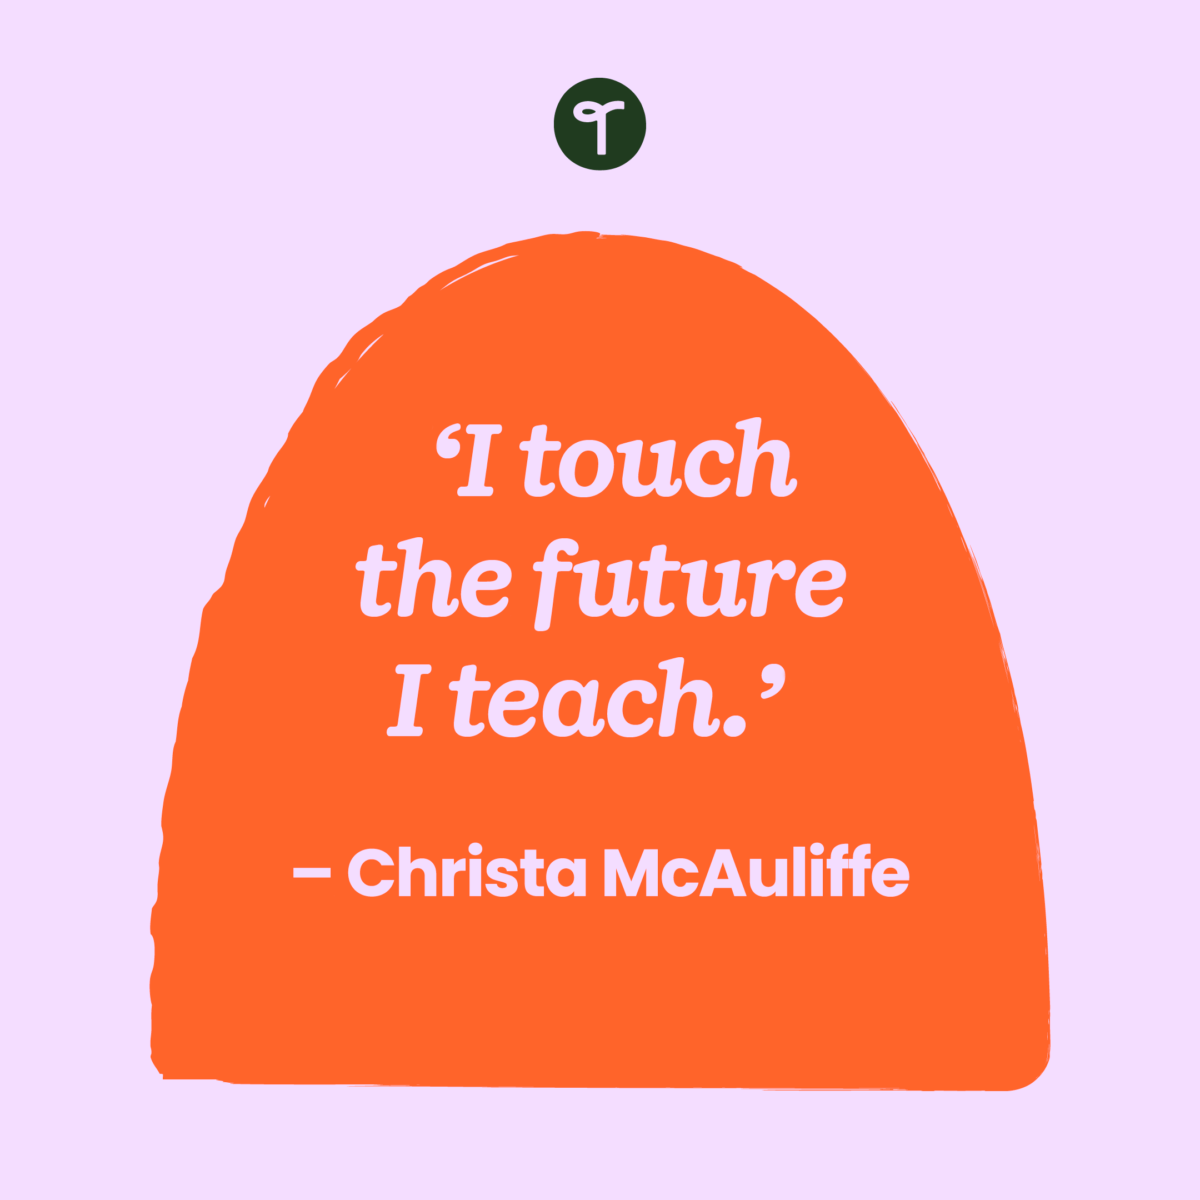 'I touch the future. I teach.' – Christa McAuliffe written on an orange half circle